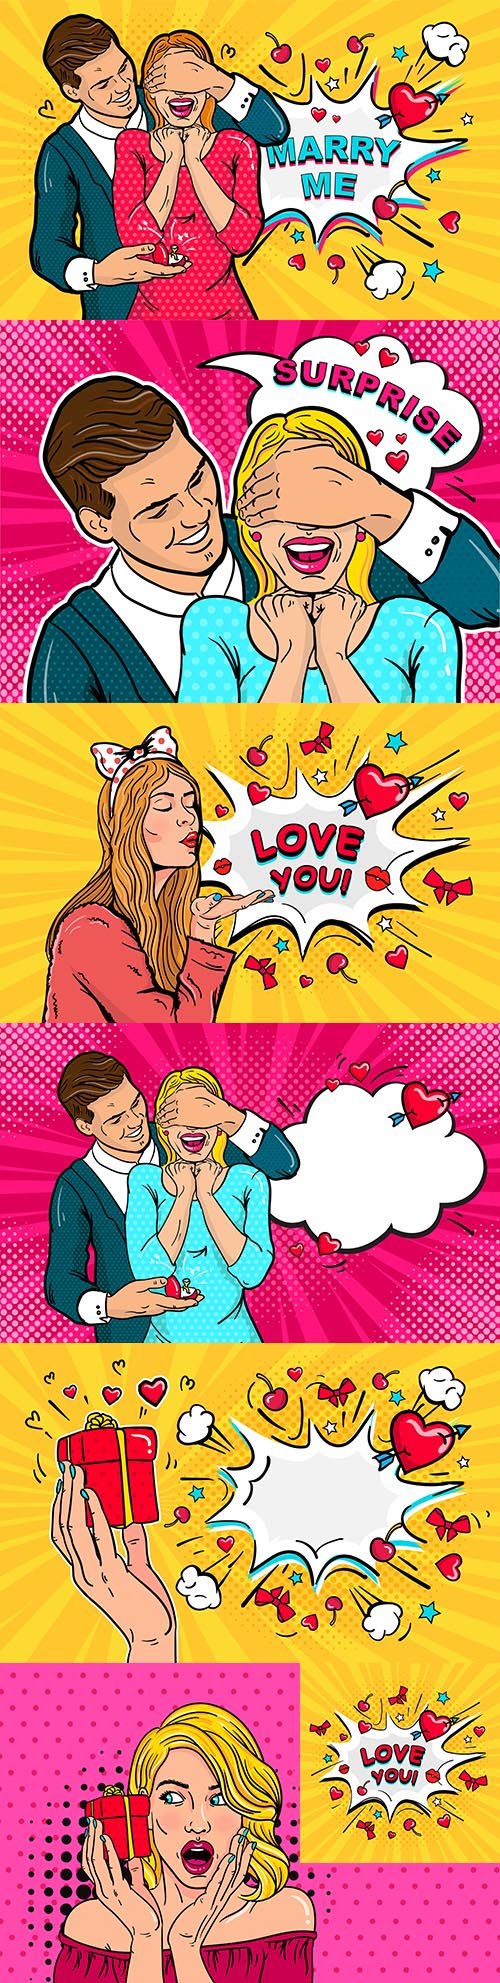 Happy couple in love illustration in pop art style